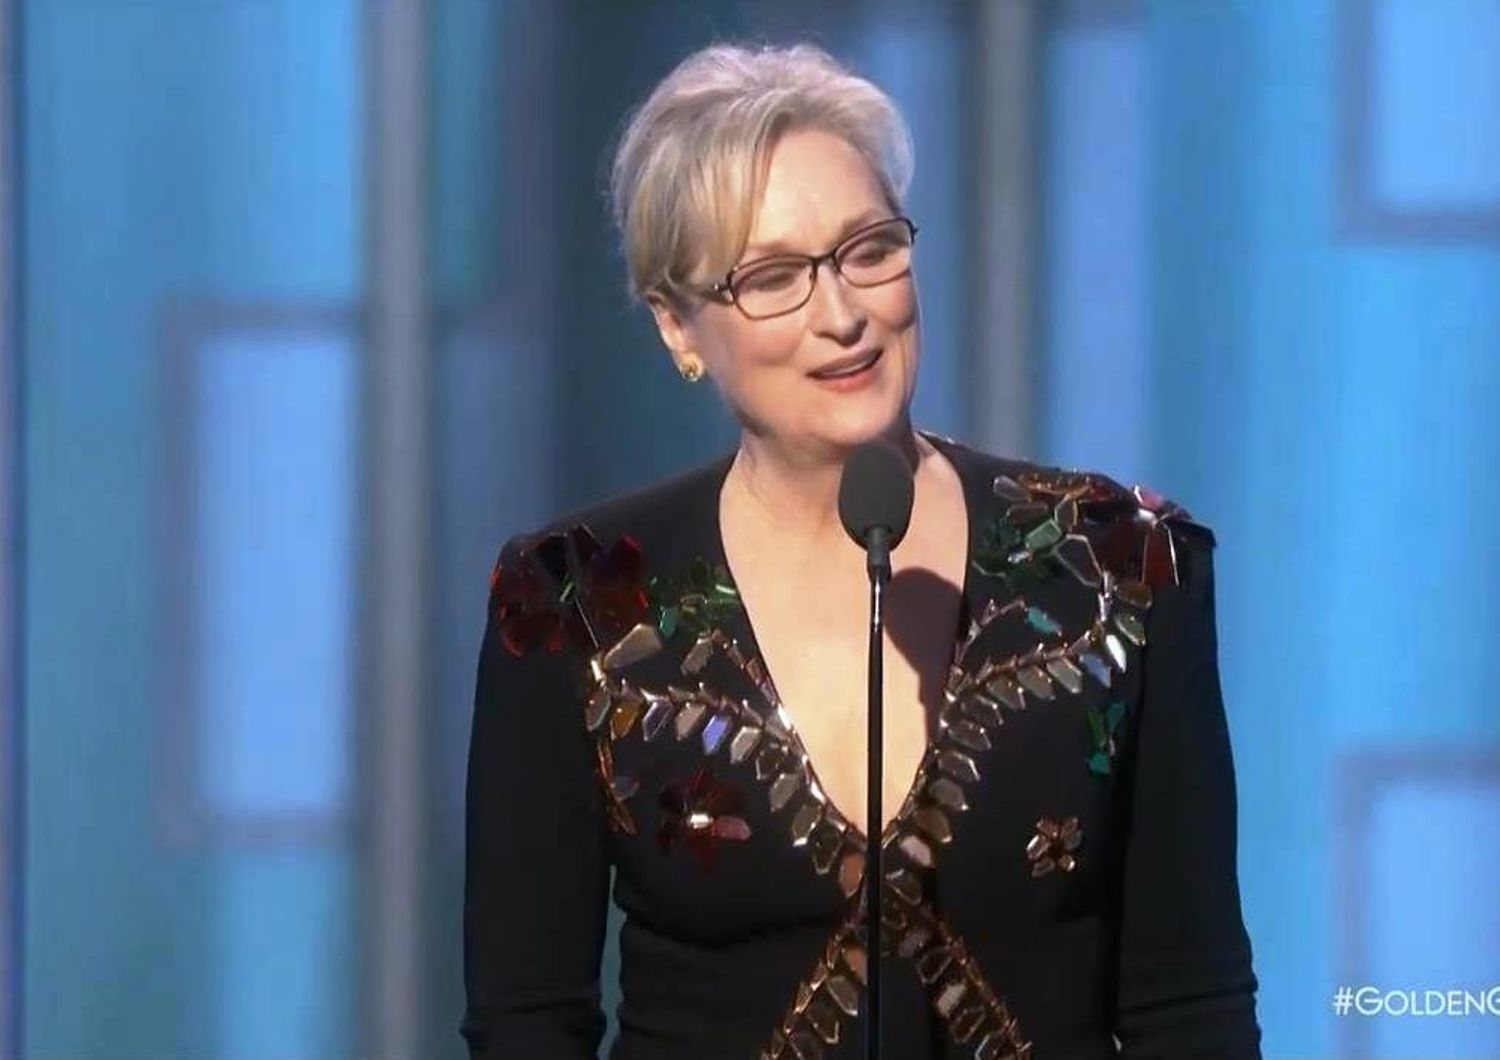 Cosa ha detto Meryl Streep a Trump ai Golden Globe